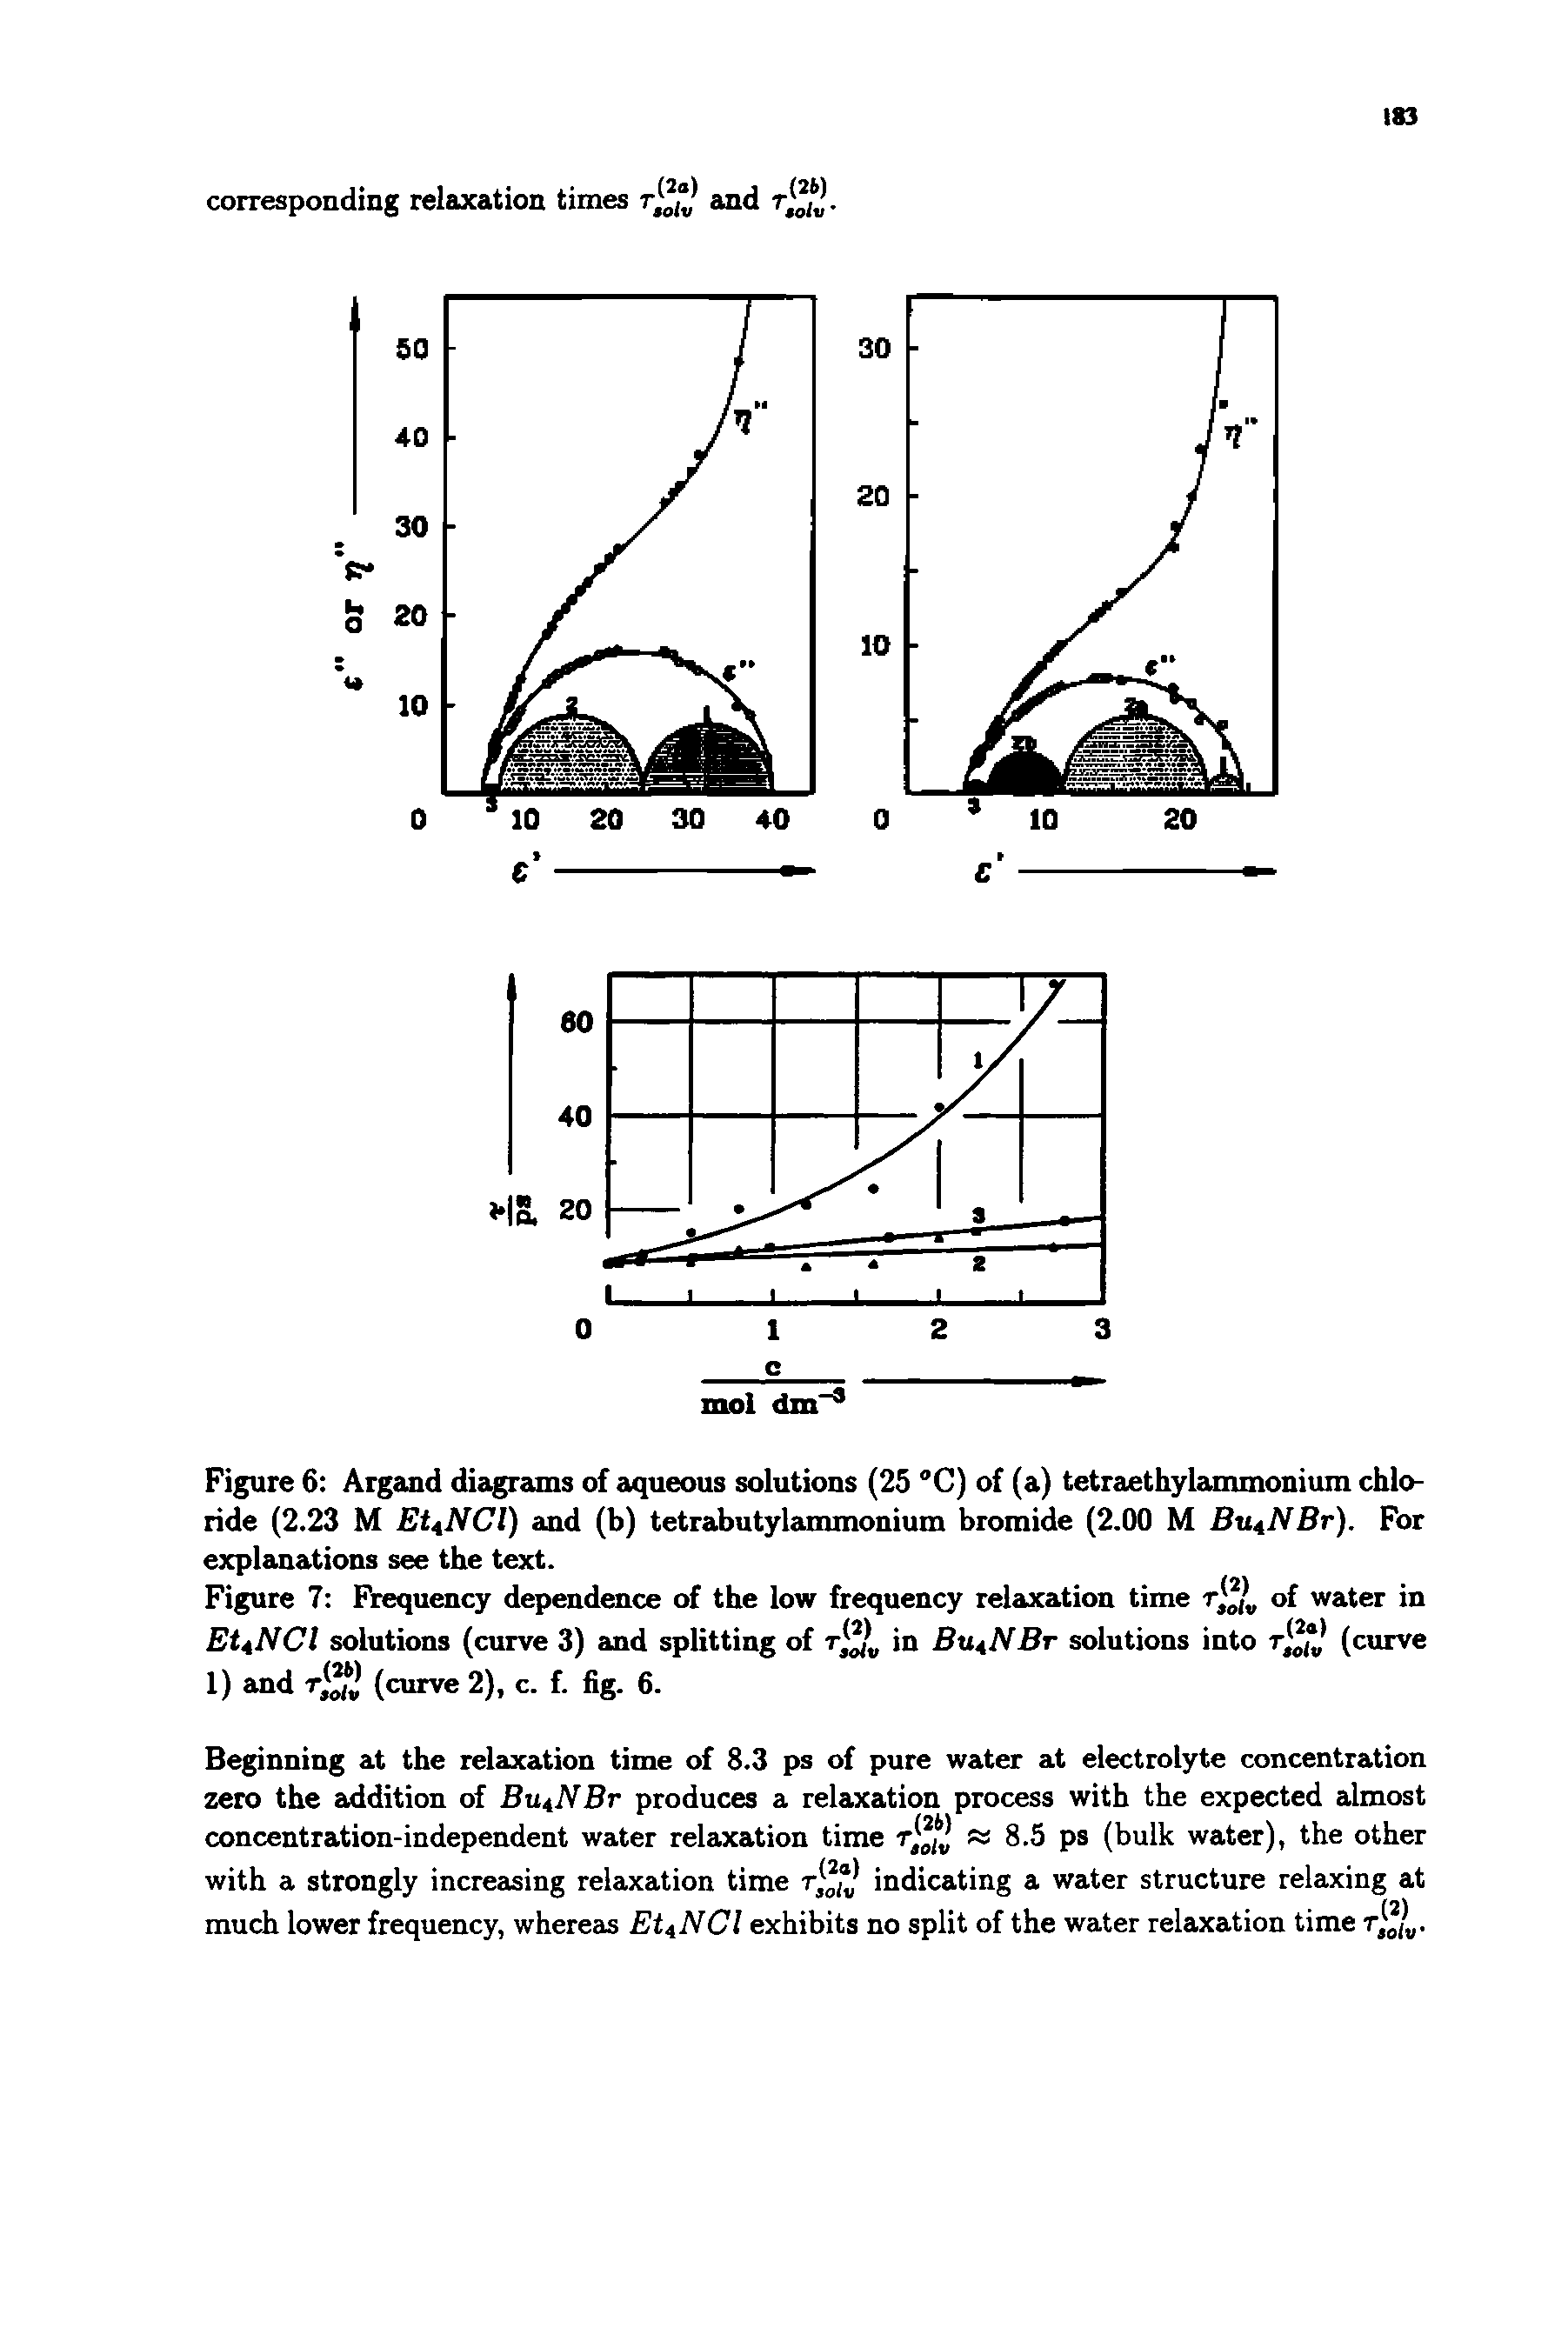 Figure 6 Argand diagrams of aqueous solutions (25 °C) of (a) tetraethylammonium chloride (2.23 M Et NCl) and (b) tetrabutylamunonium bromide (2.00 M Bu NBr). For explanations see the text.